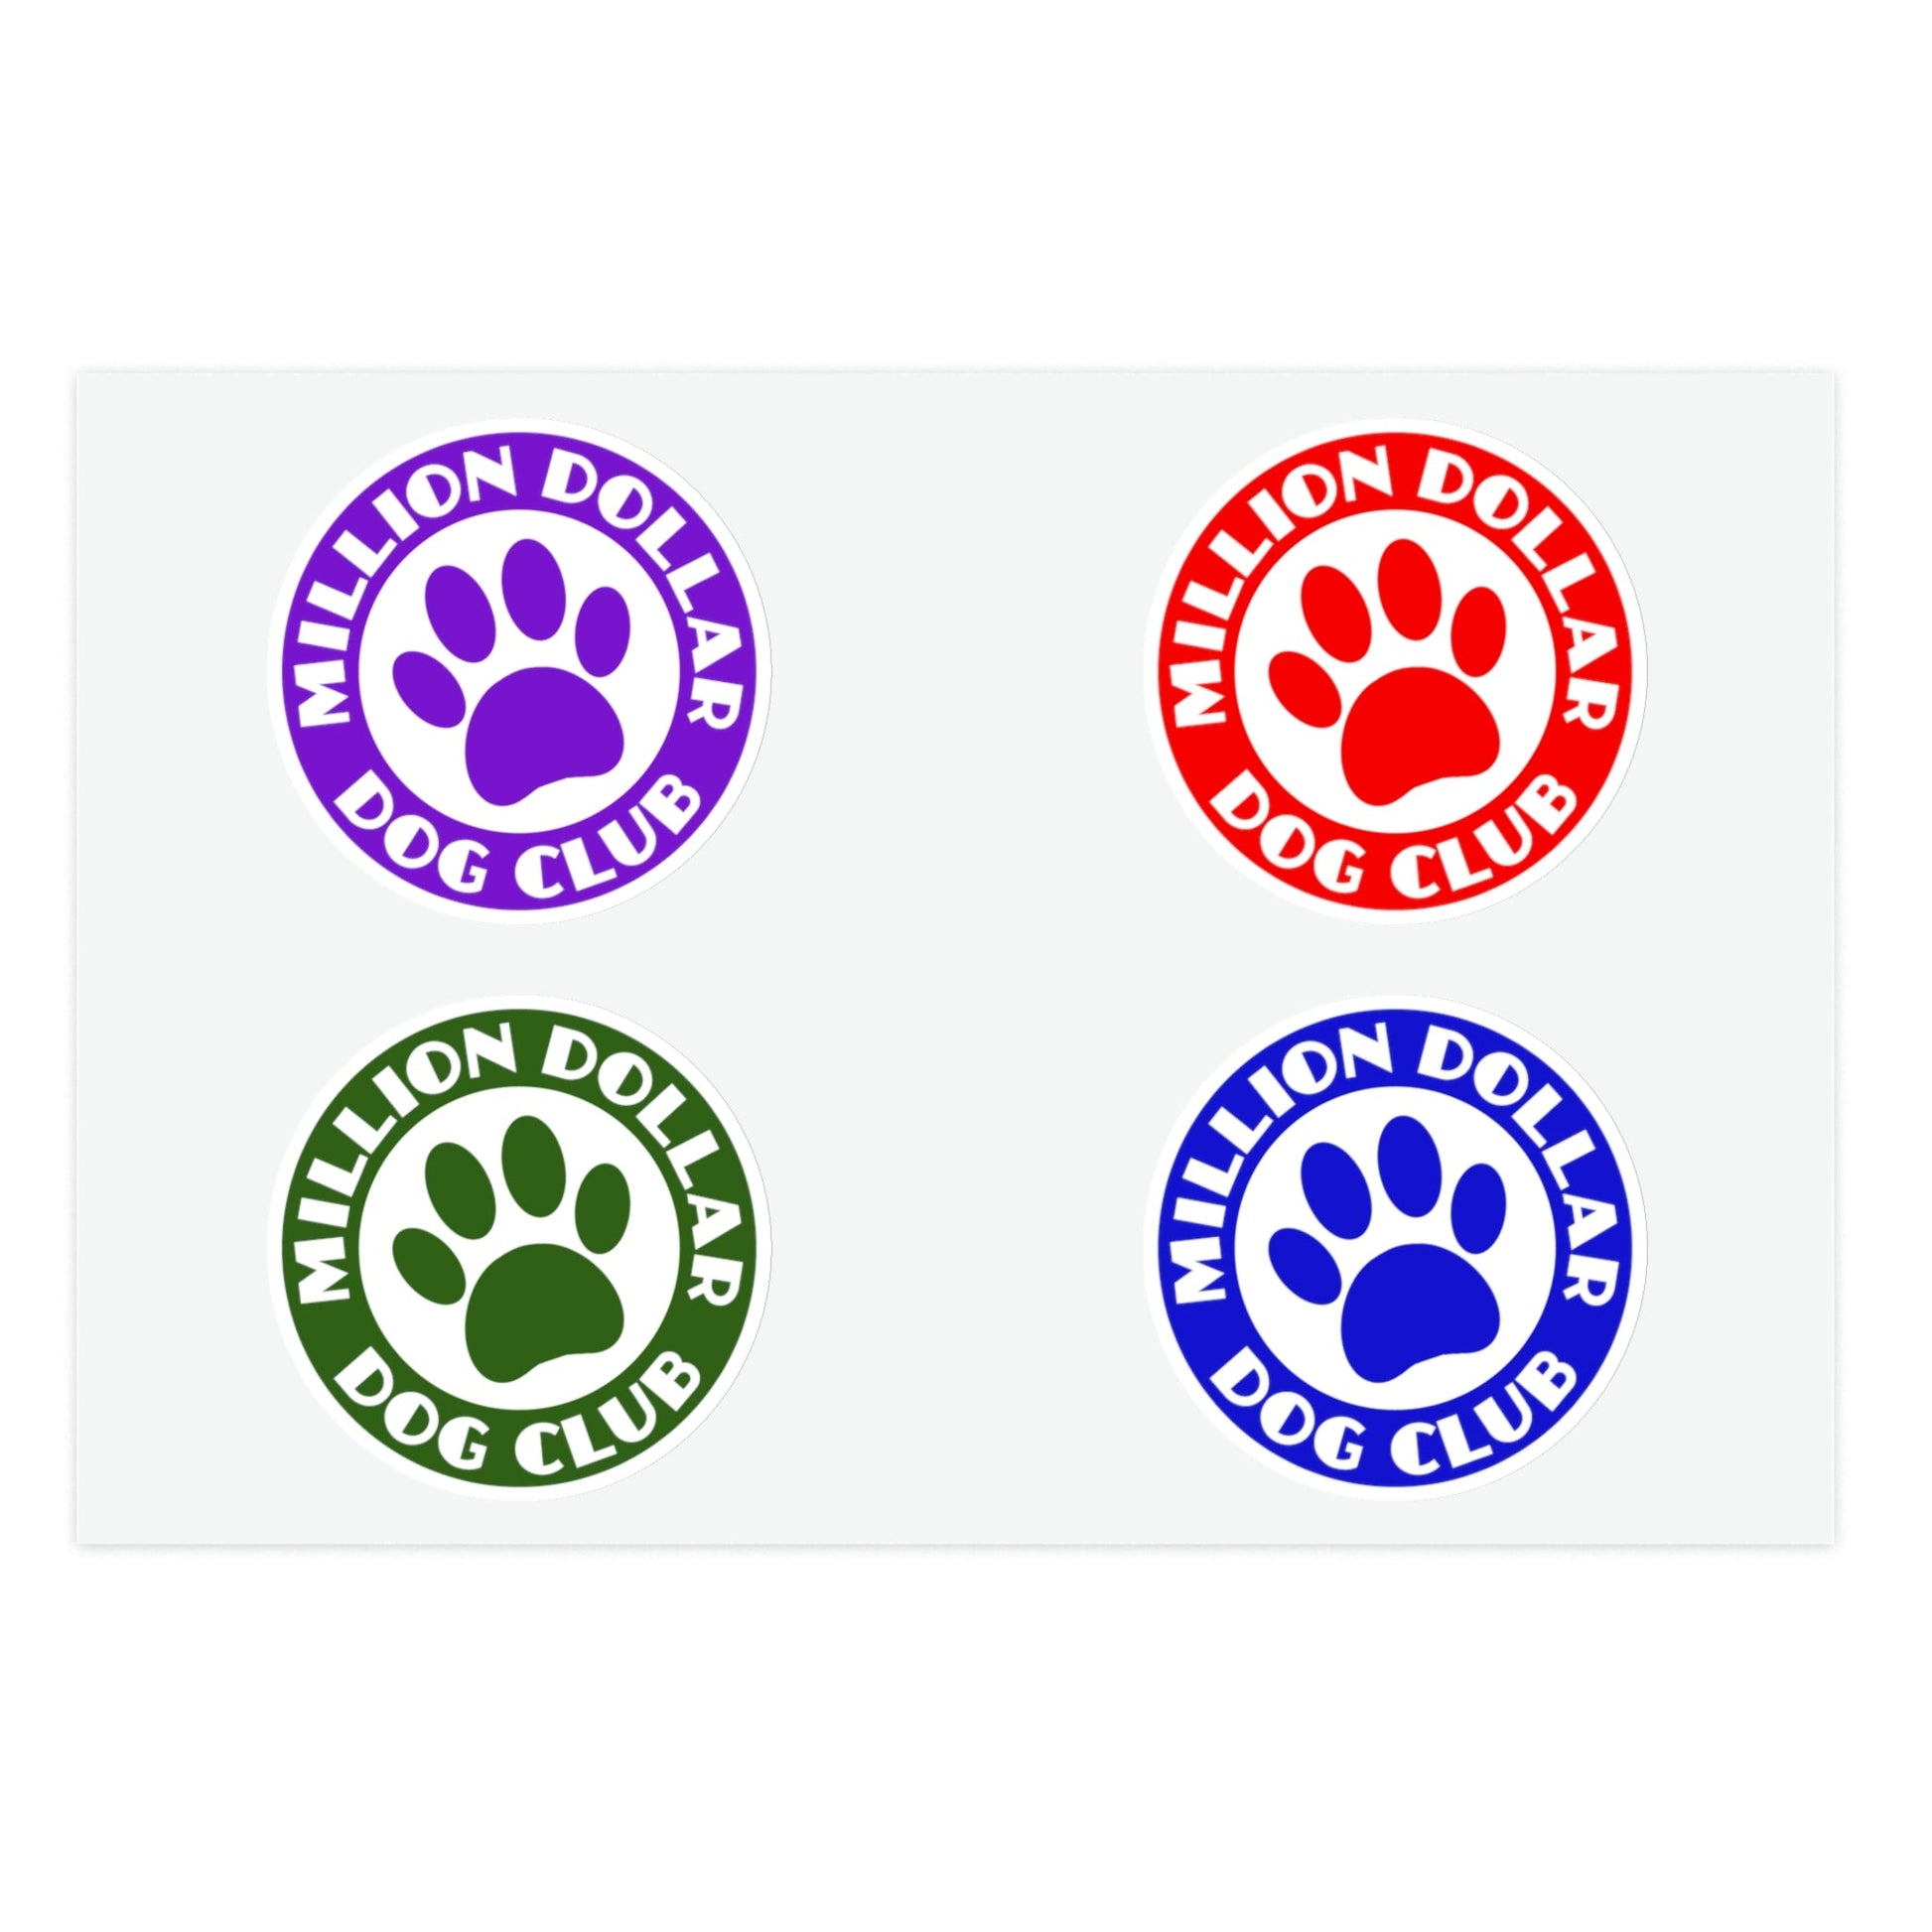 Million Dollar Dog Club | Sticker Sheet - Detezi Designs-30745520428916438519